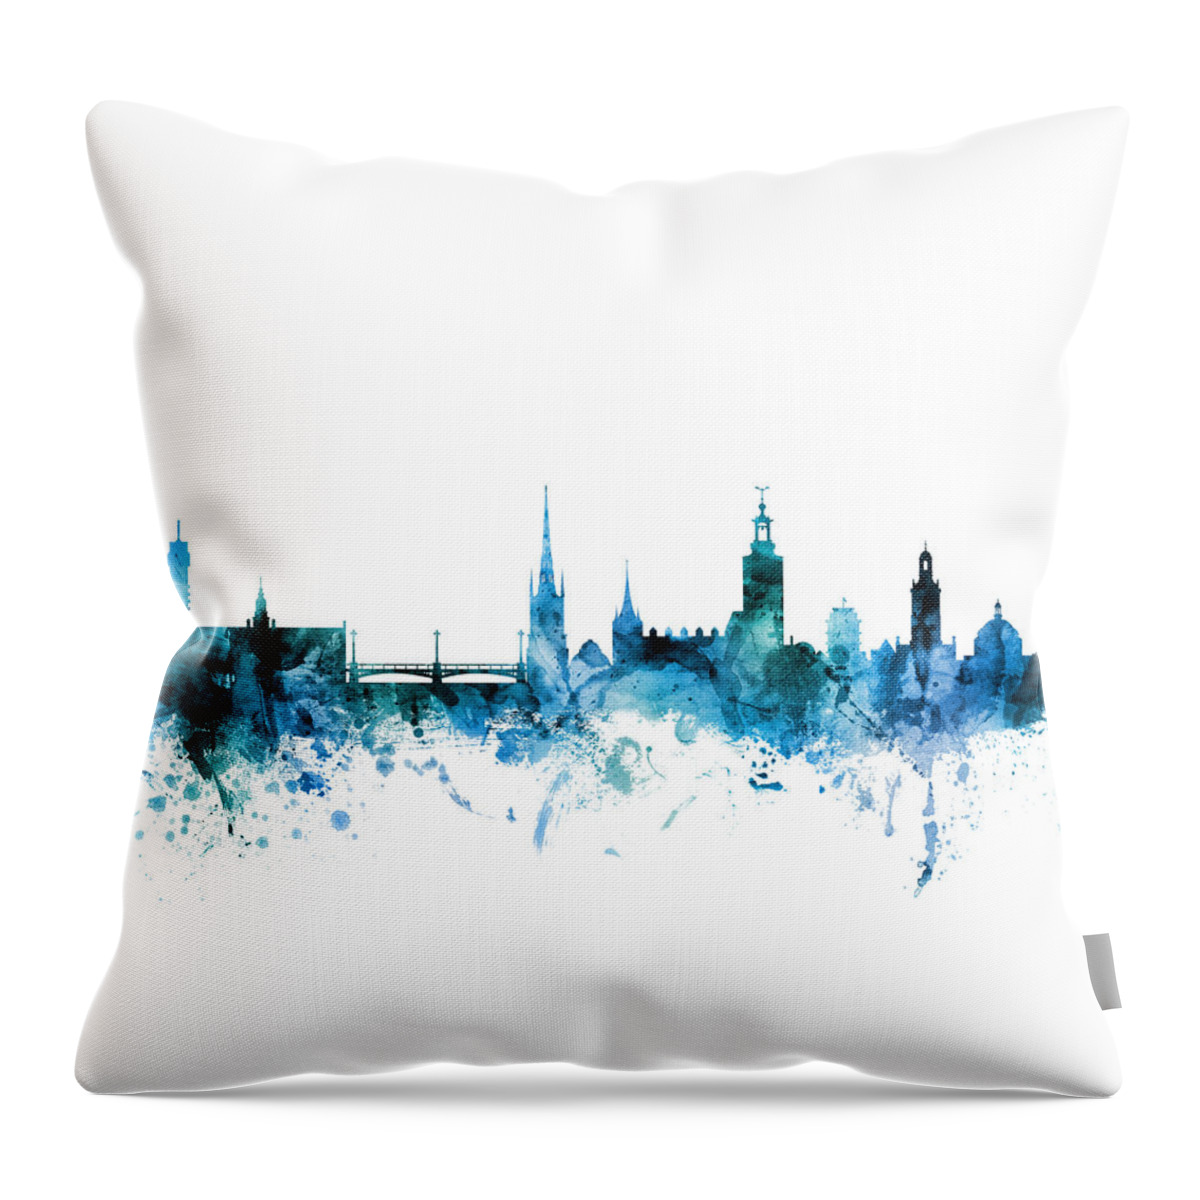 Stockholm Throw Pillow featuring the digital art Stockholm Sweden Skyline by Michael Tompsett